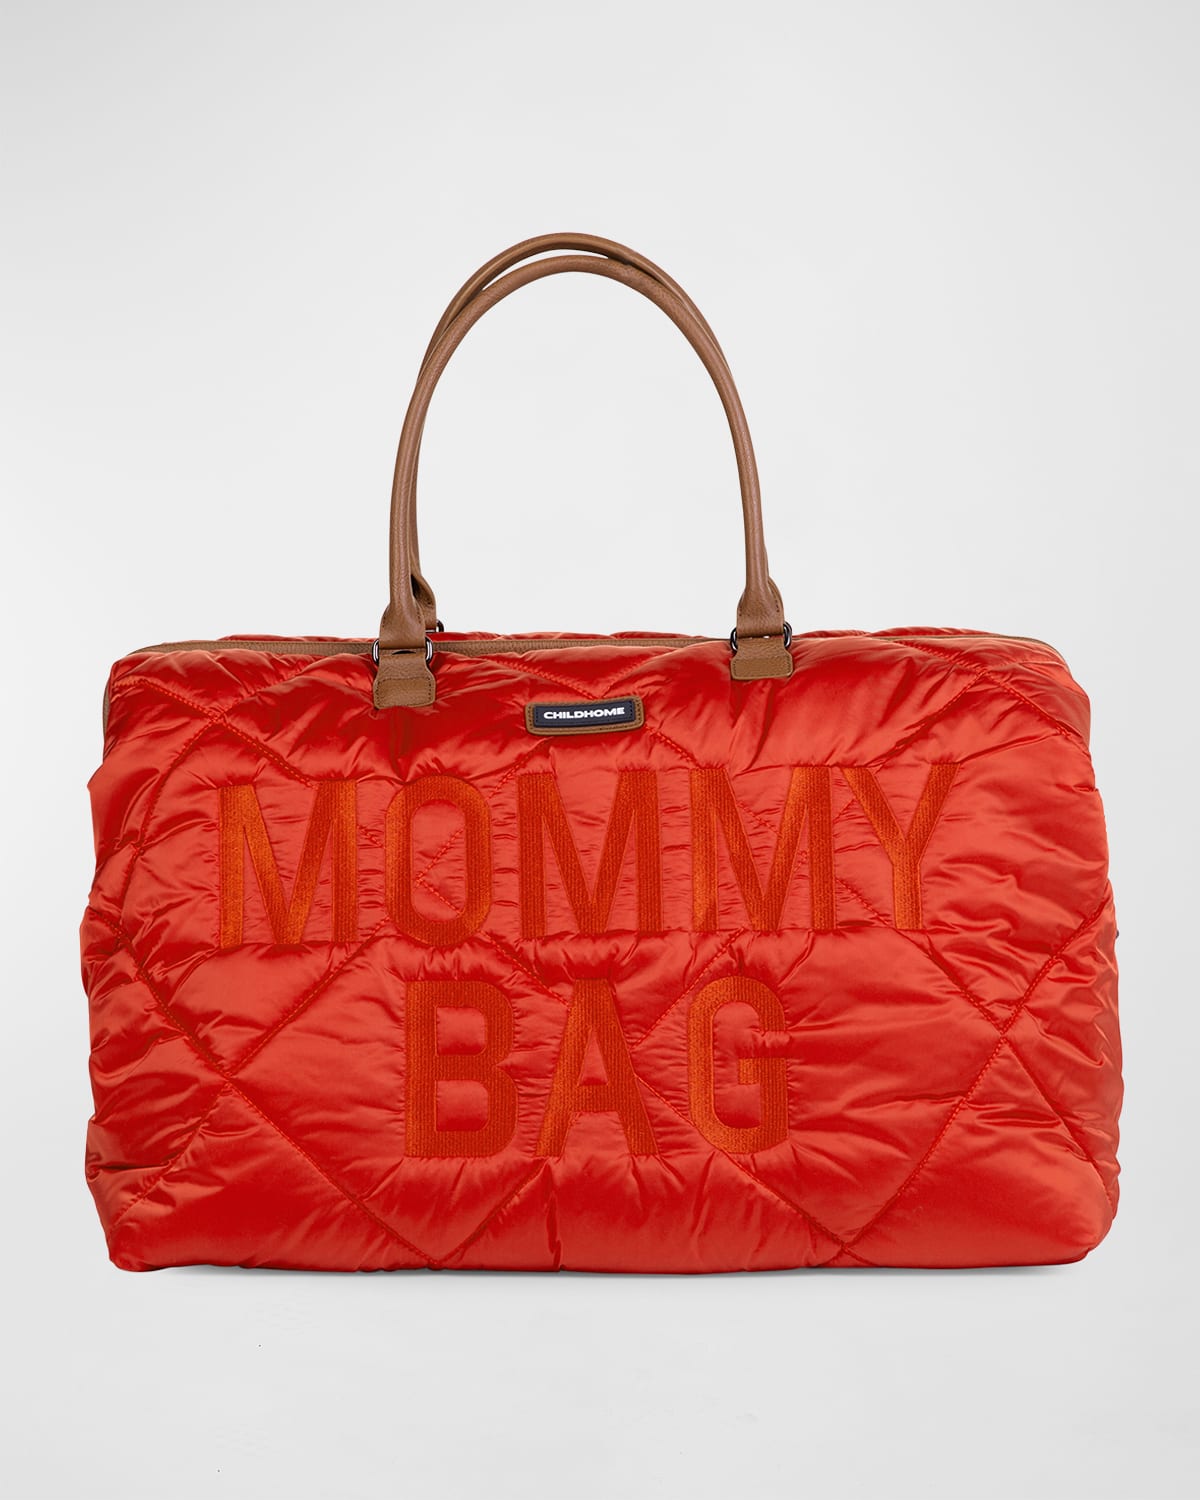 Childhome Puffer Mommy Bag, XL Diaper Bag